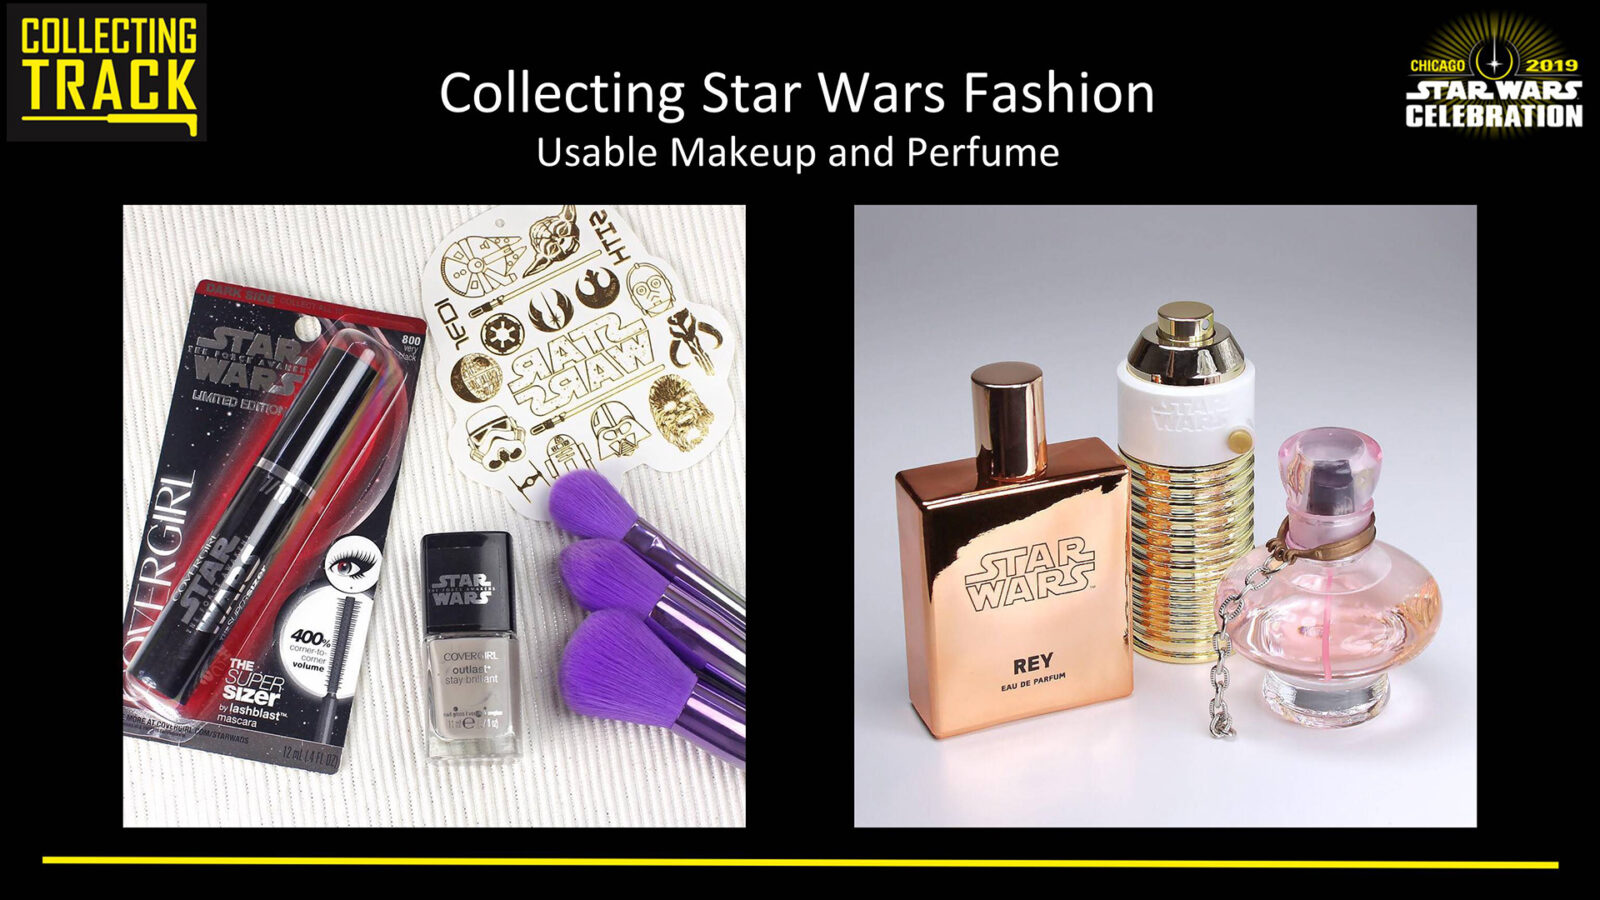 Star Wars Celebration 2019 - Collecting Star Wars Fashion panel 06